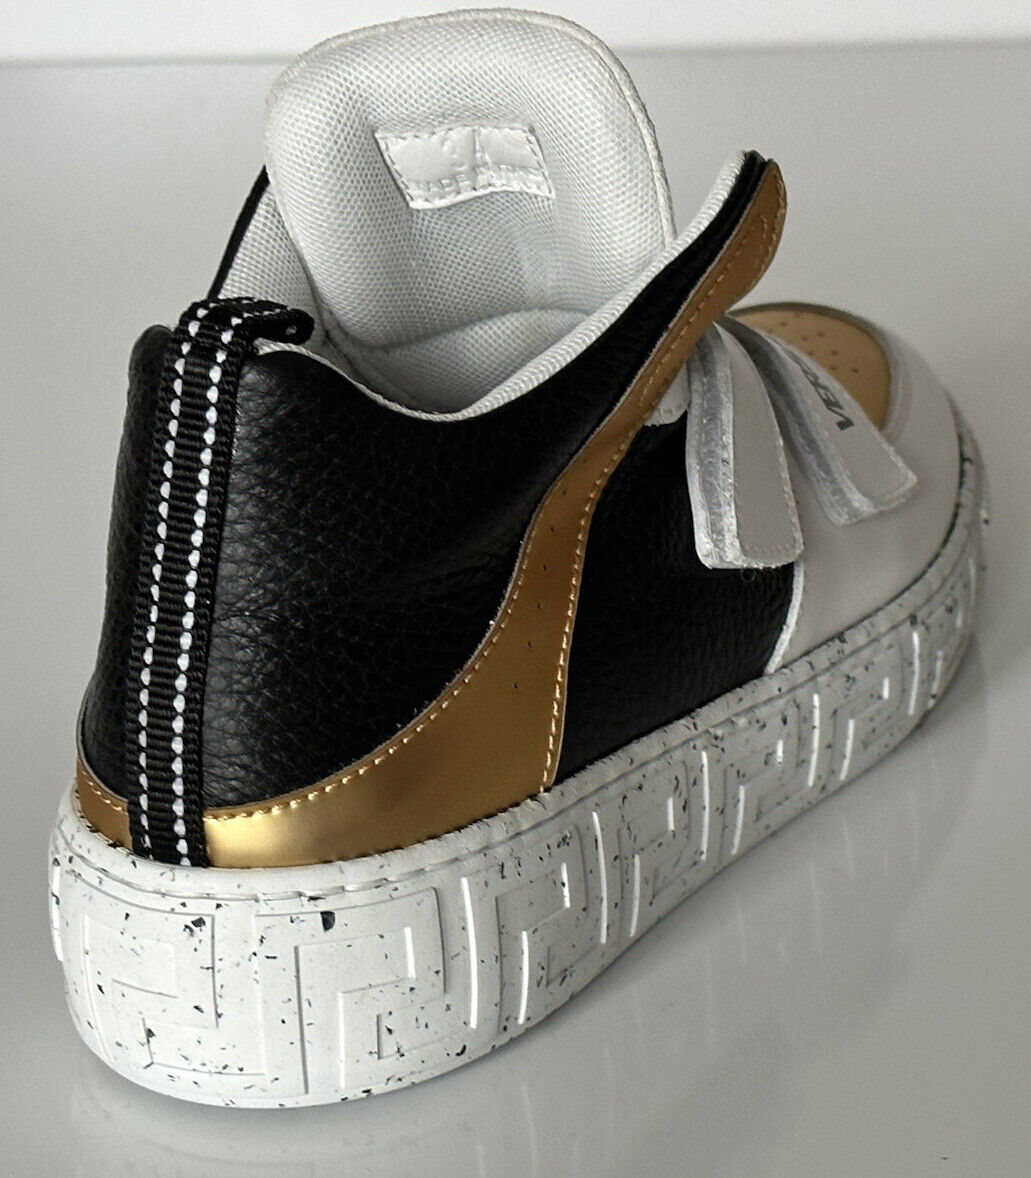 NWT $575 Versace La Greca Boys High Top Sneakers 34 Euro (9.7" Length) Italy